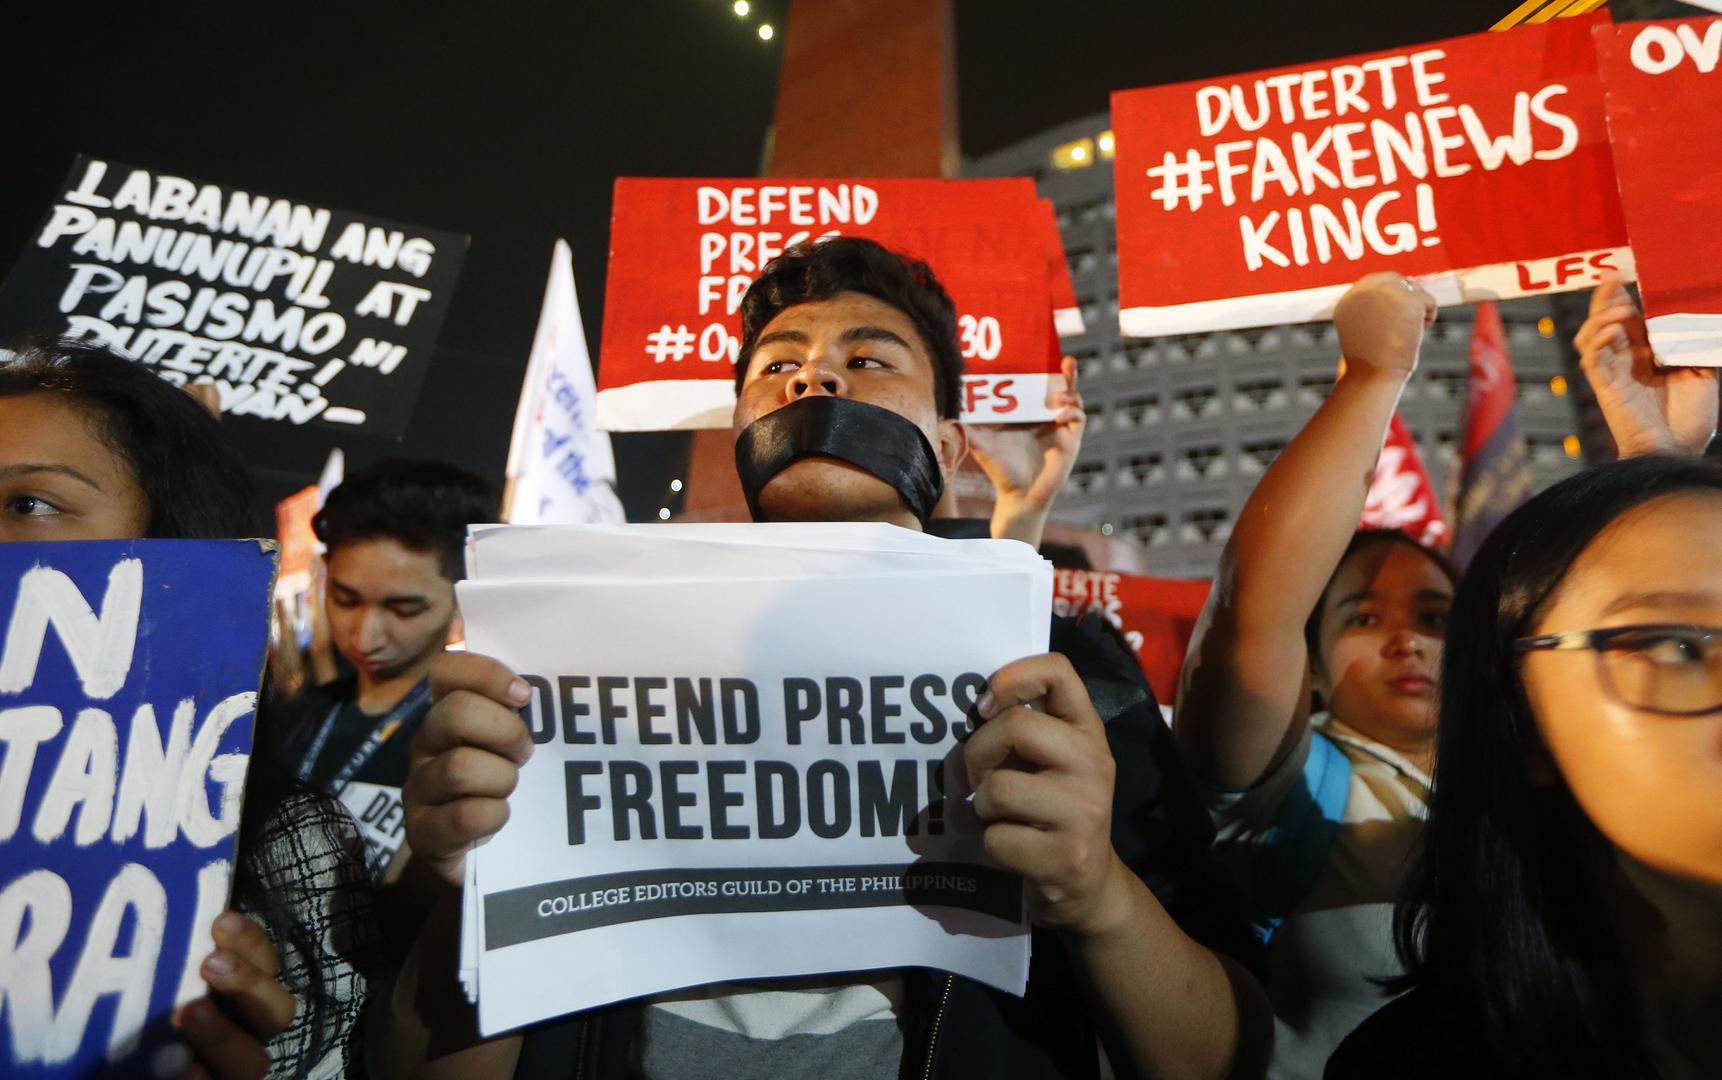 Duterte Threatens to Shut Down TV Network